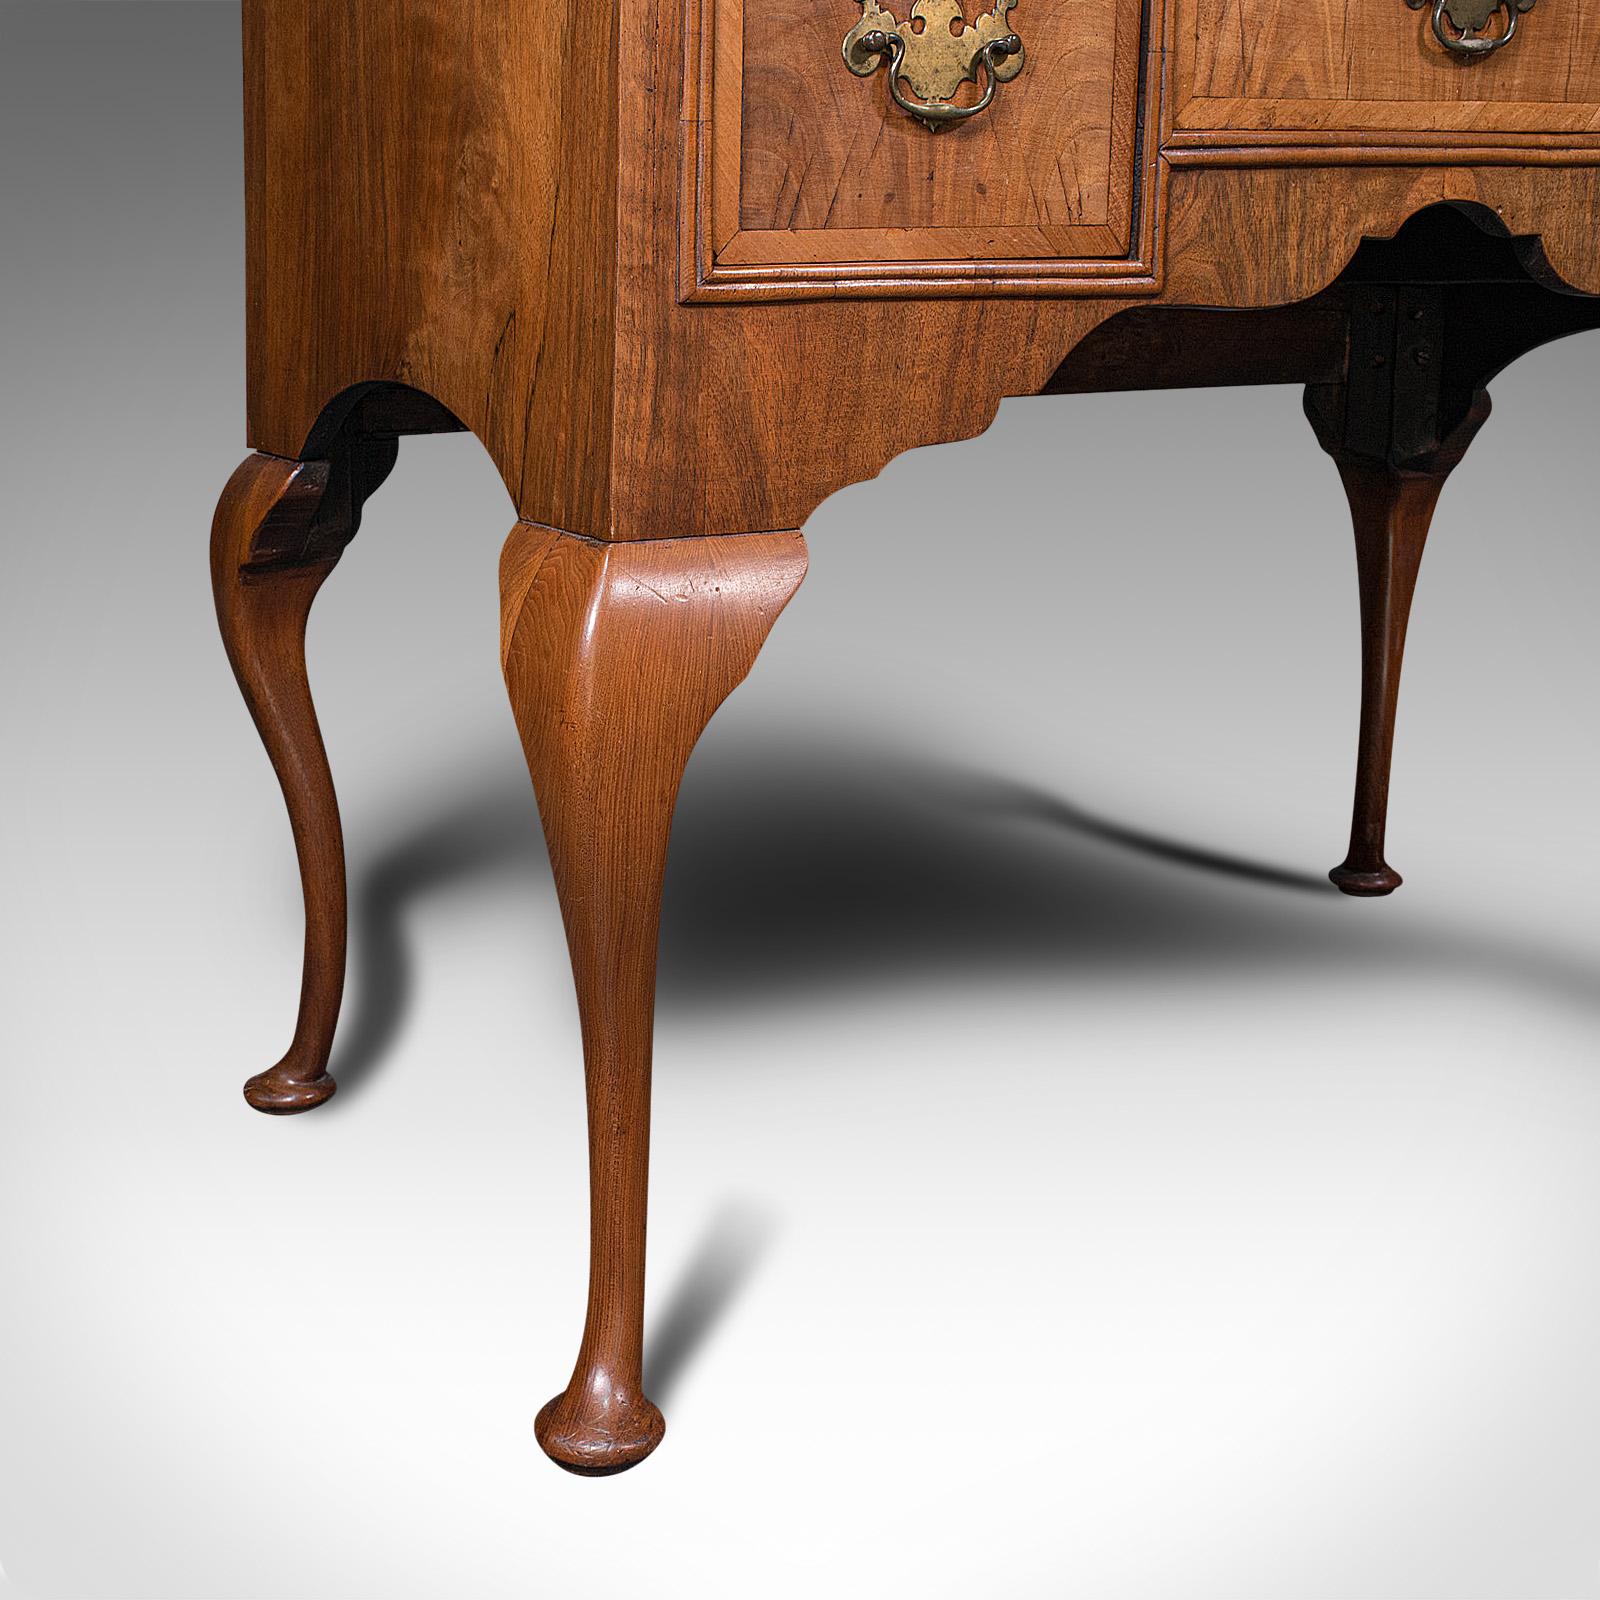 Antique Writing Desk, English, Burr Walnut, Oak, Lowboy, Table, Georgian, C.1800 6